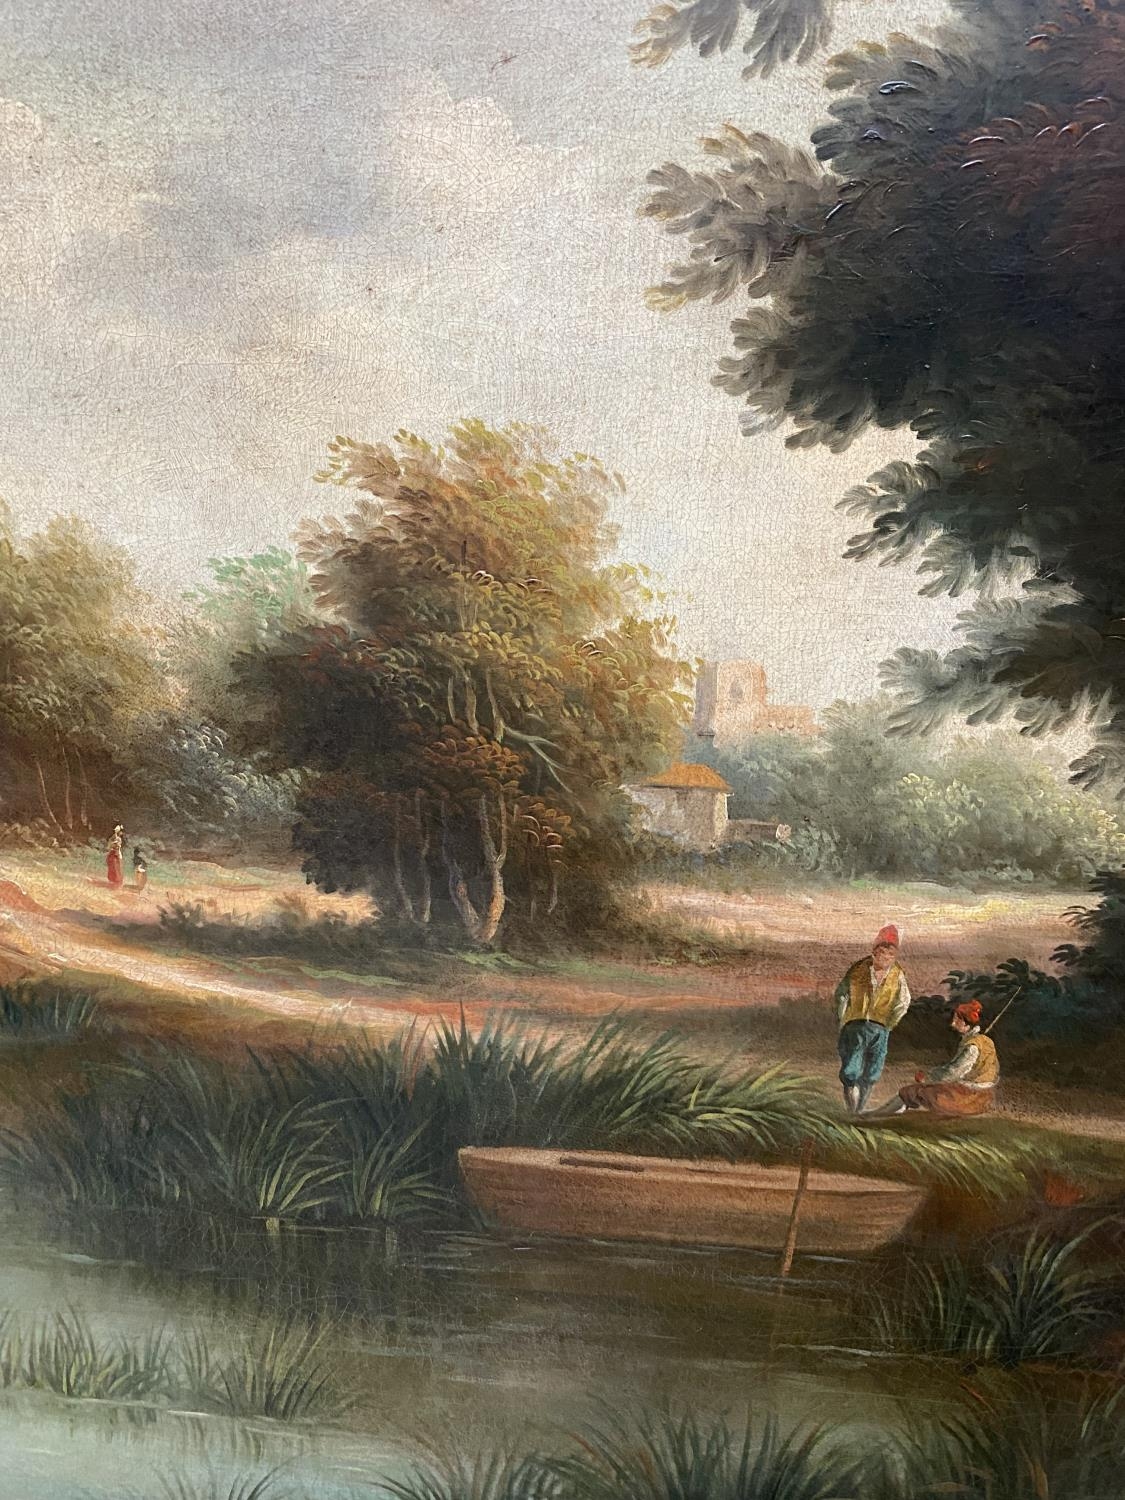 ALLESSANDRO MAFFEI CIRCA 1790-1859, Italian, Oil on canvas, Country River Scene, signed lower right, - Image 4 of 6